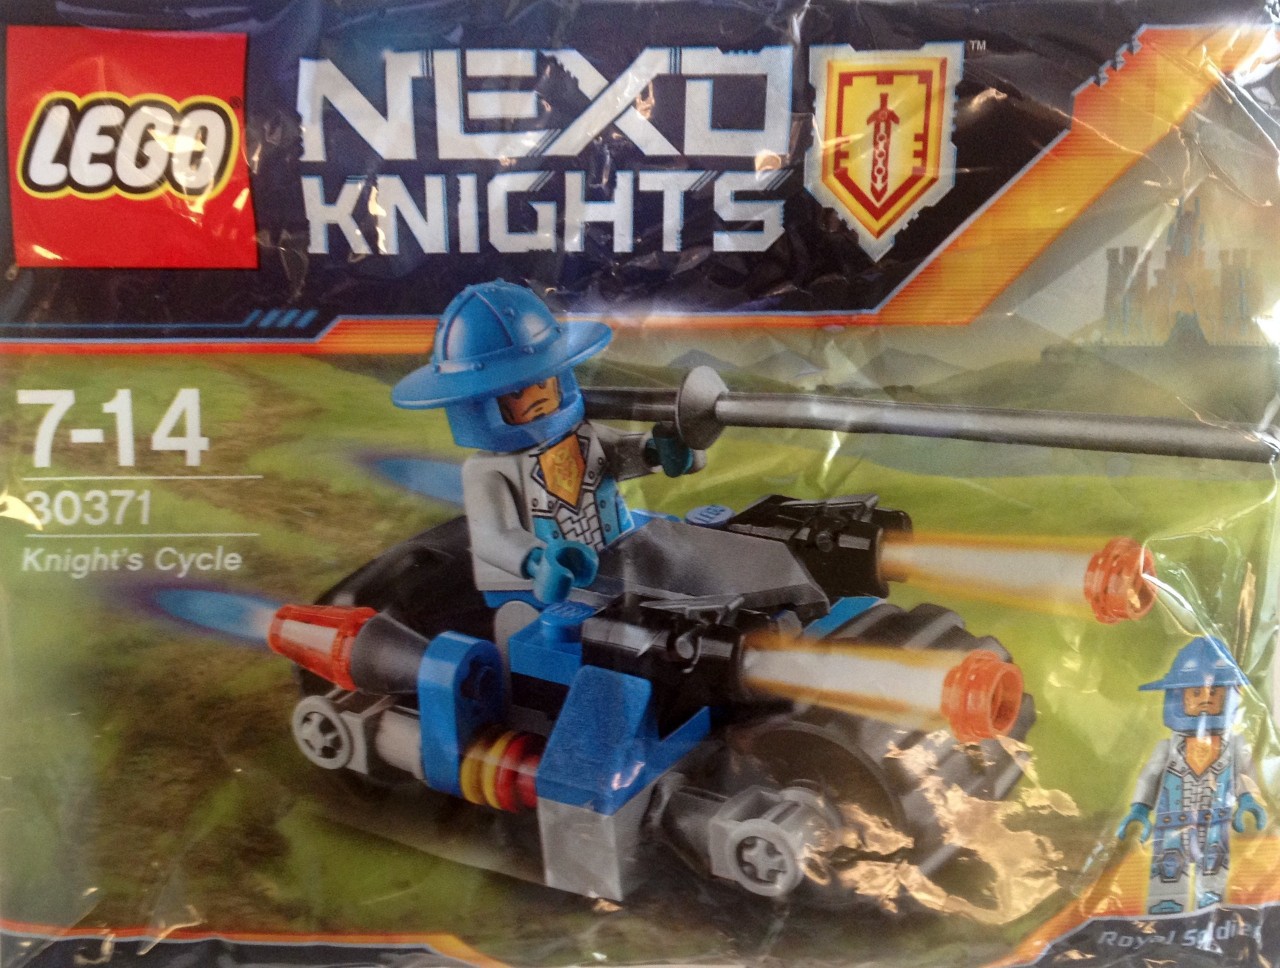 30371 Knights "Knight's Cycle" Polybag - LEGO News - BRICKPICKER